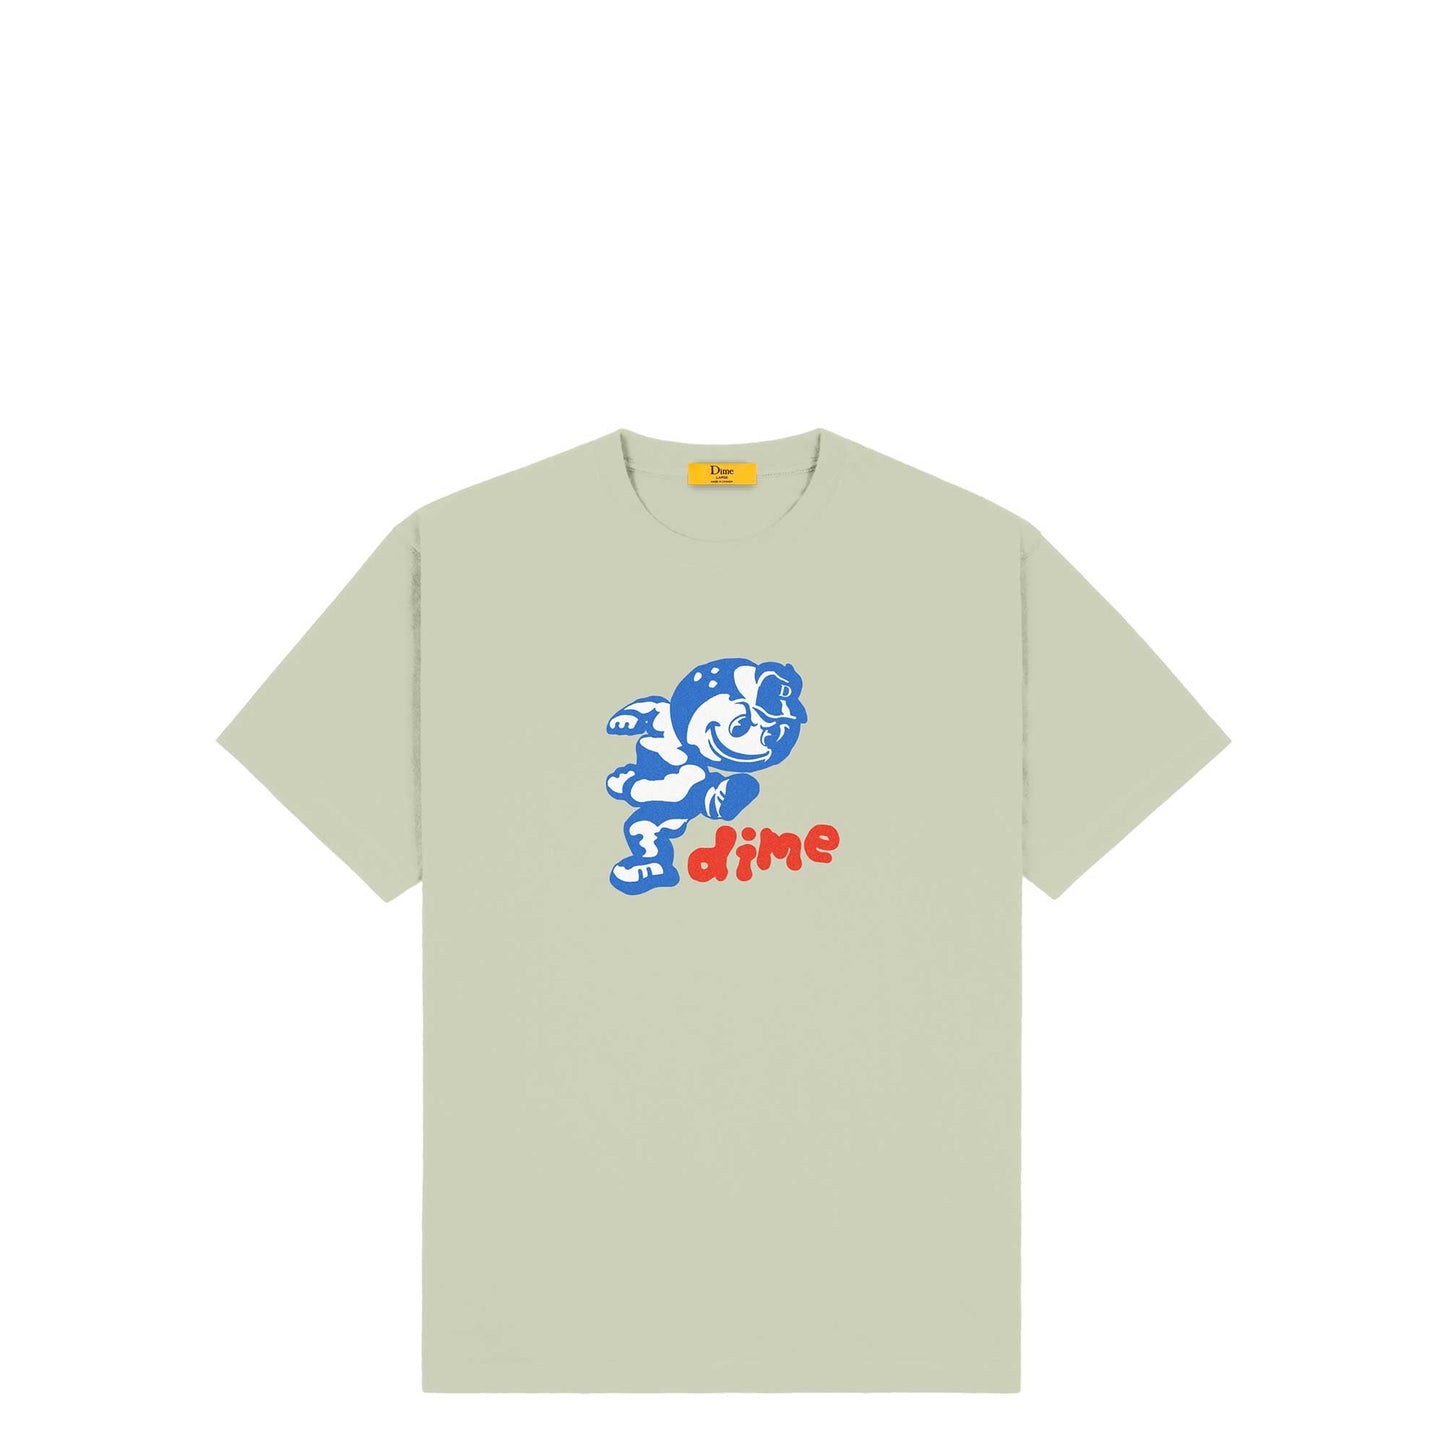 Dime Ballboy T-Shirt, clay - Tiki Room Skateboards - 1